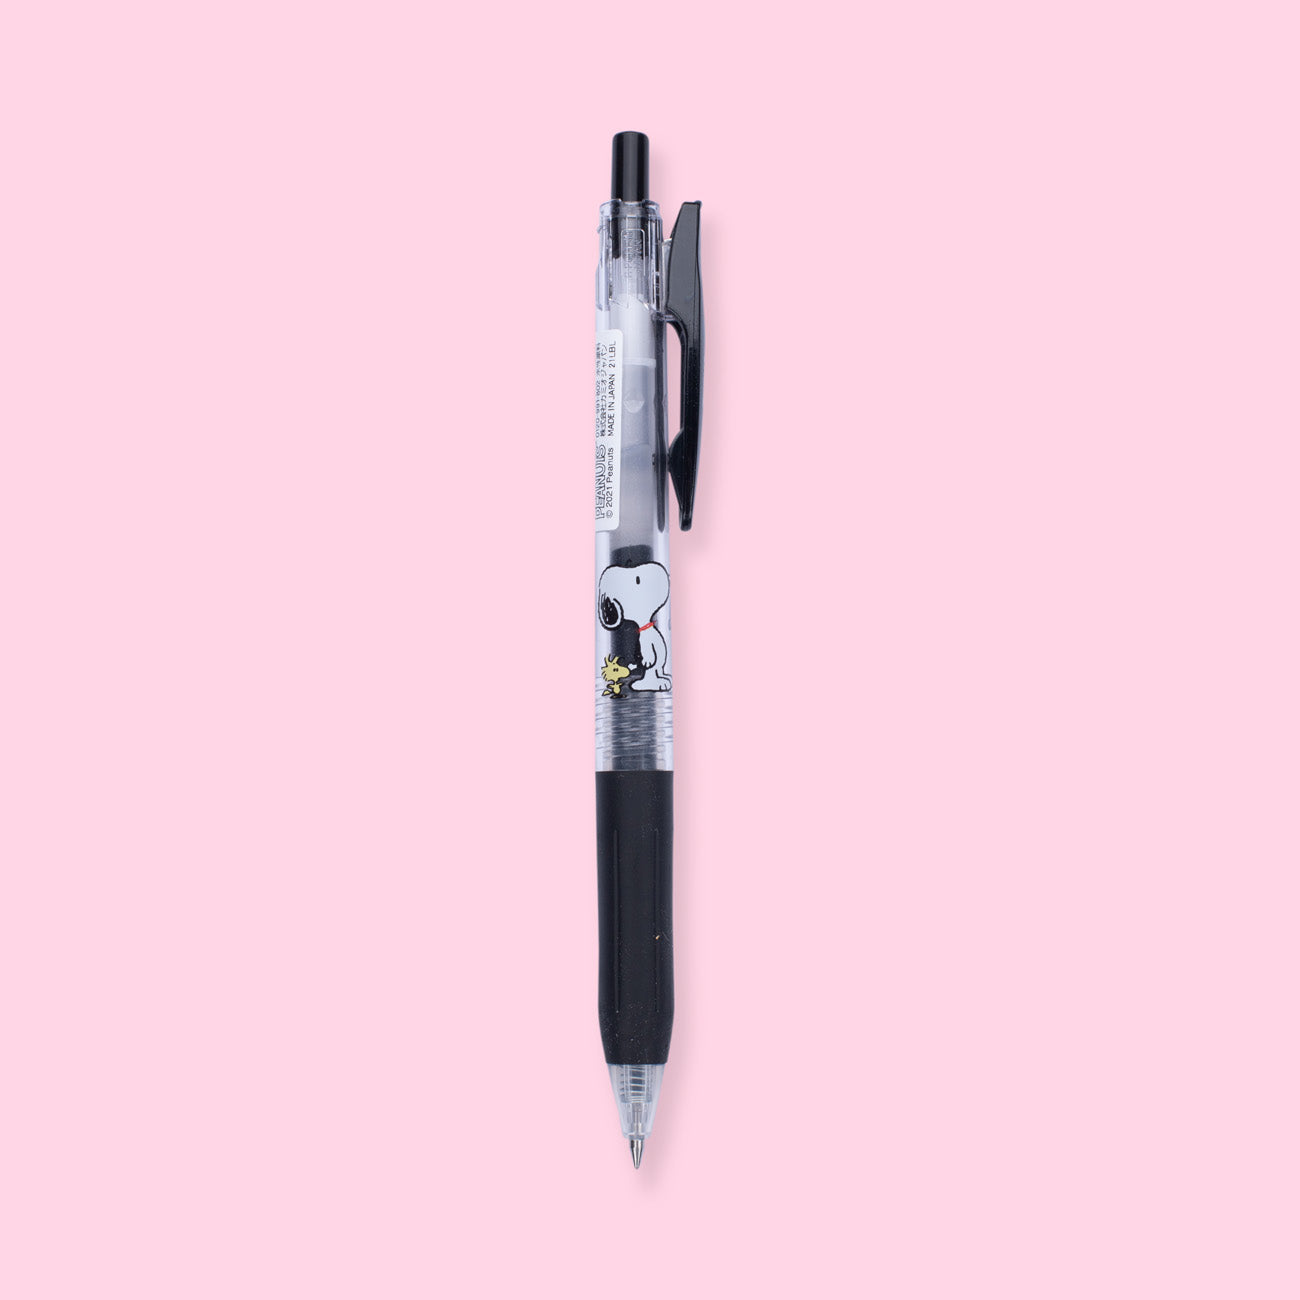 Zebra Sarasa Snoopy Clip Ballpoint Pen - Black